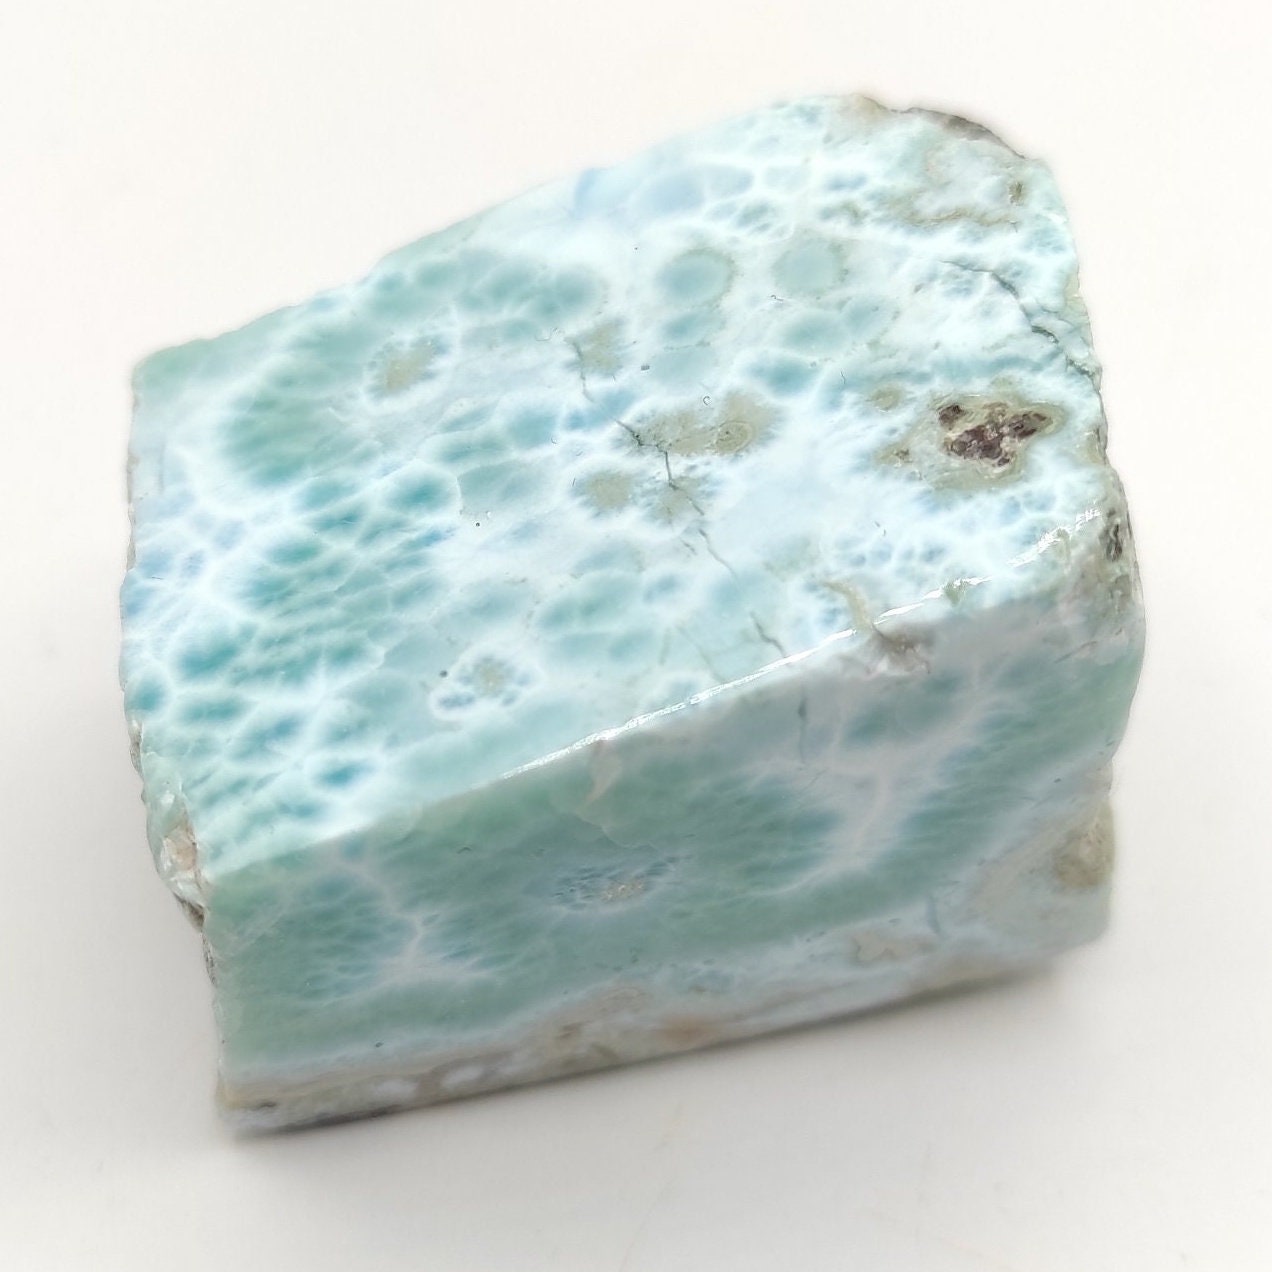 77g Larimar Freeform - Polished and Raw - Sky Blue Larimar - Barahona, Dominican Republic - Rare Larimar Crystal - Hand Polished Larimar